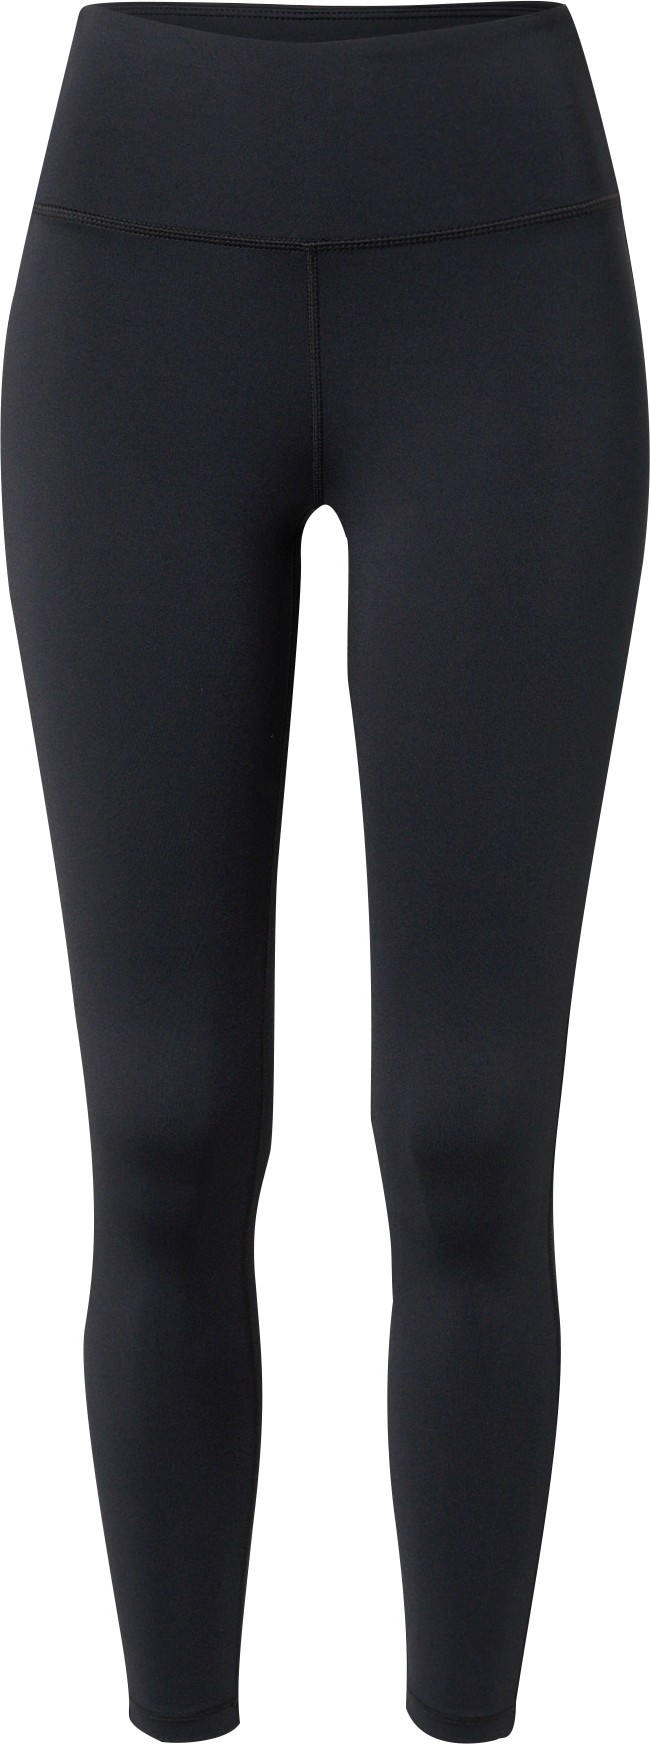 DARE2B Sportovní kalhoty 'Influential' černá / bílá